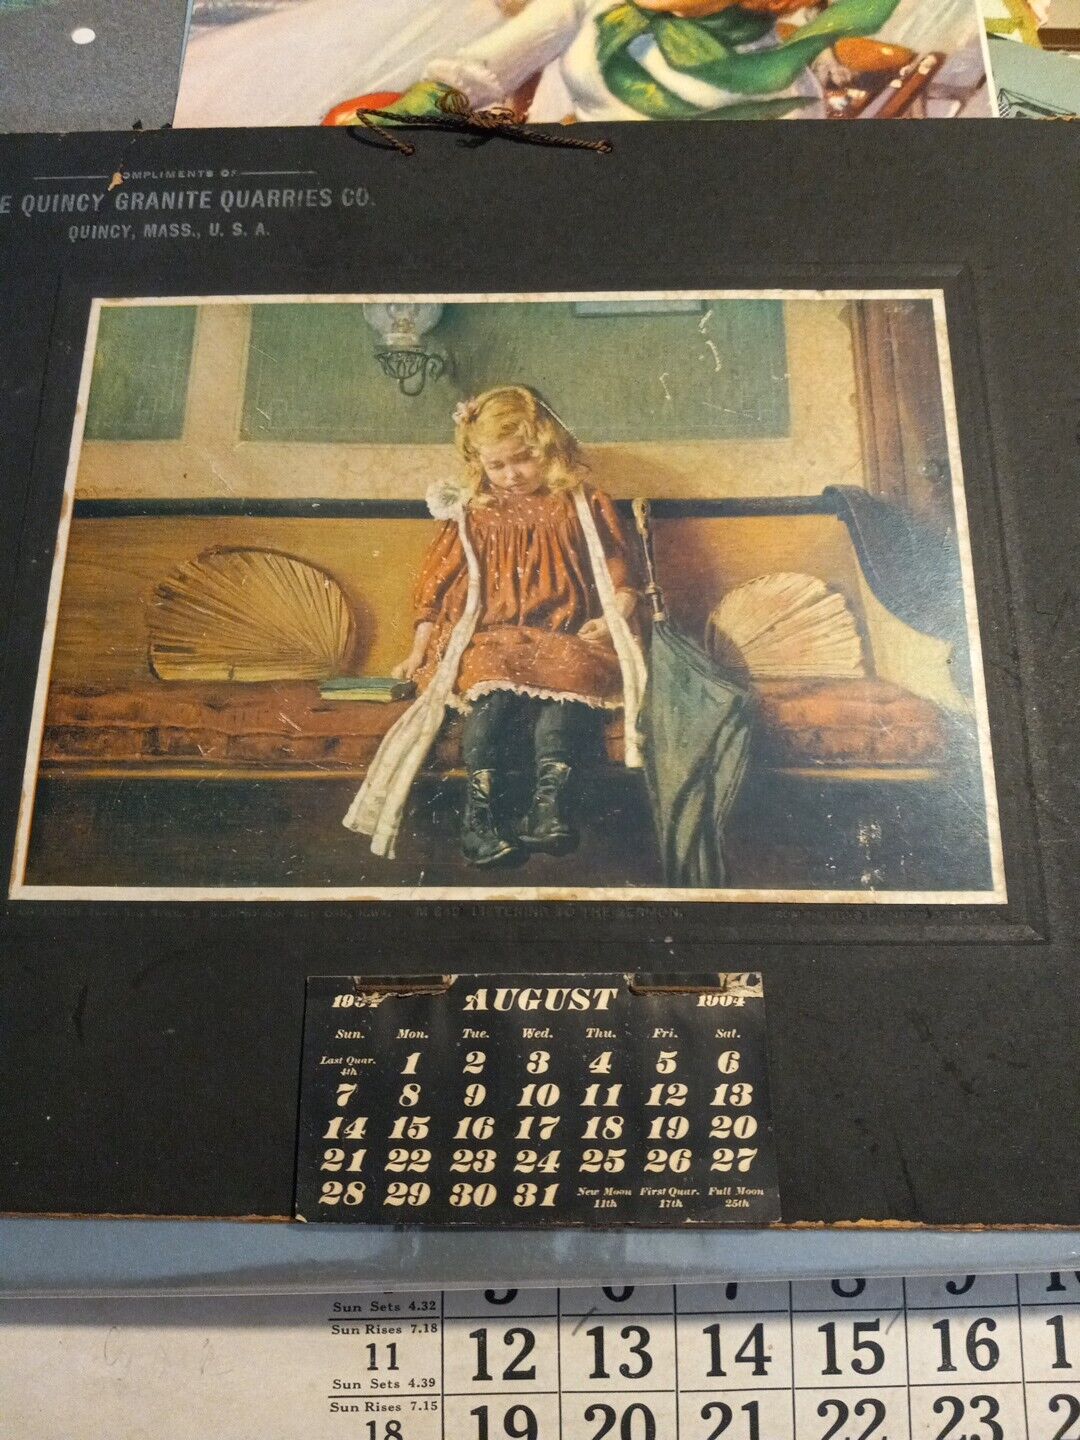 1904 ad calendar The Quincy Granite Quarries Co. Massachusetts